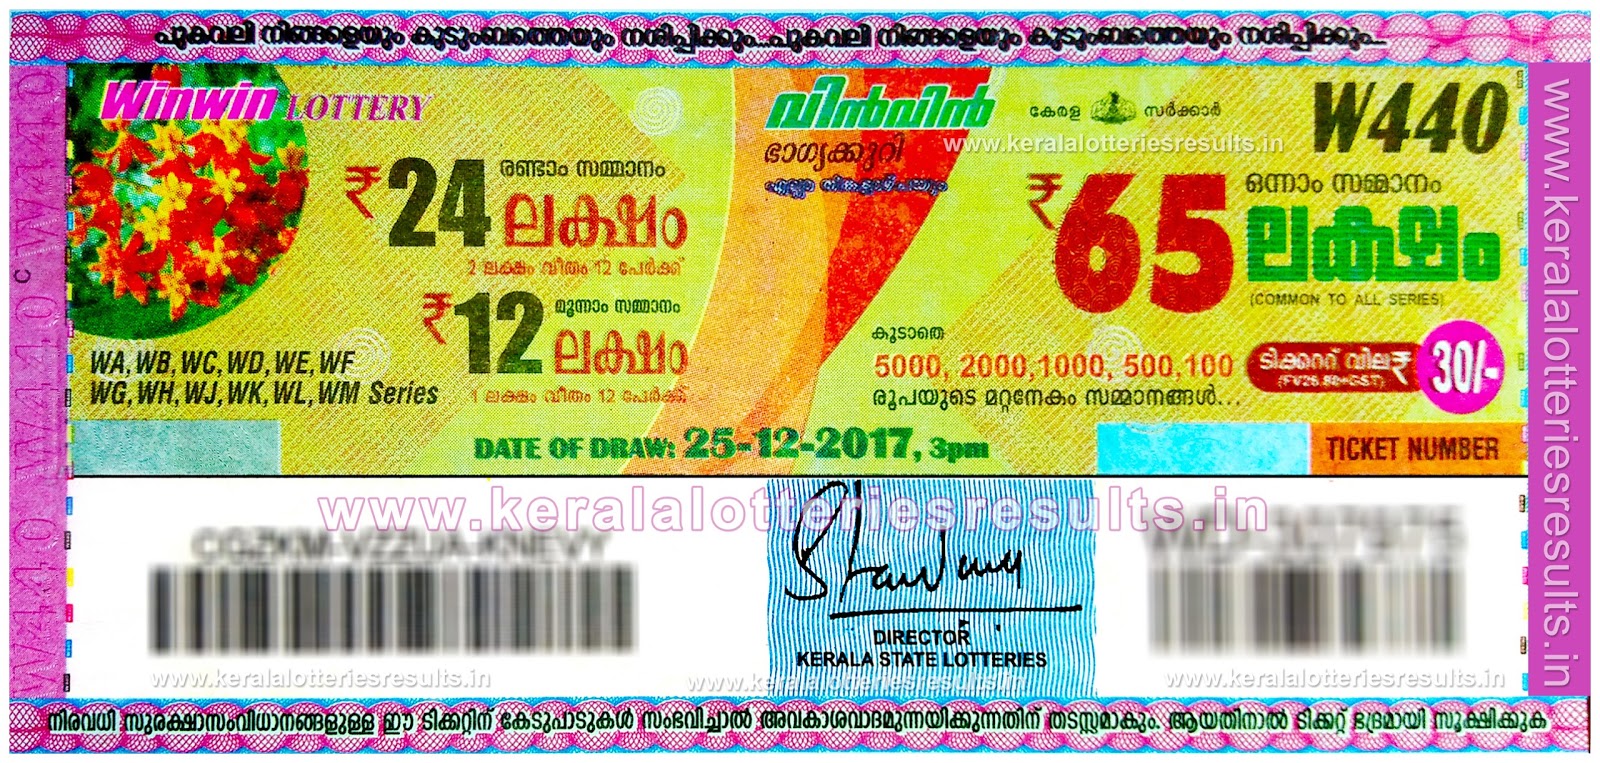 Kerala Lottery Result; 25-12-2017 "Win Win Lottery Results 